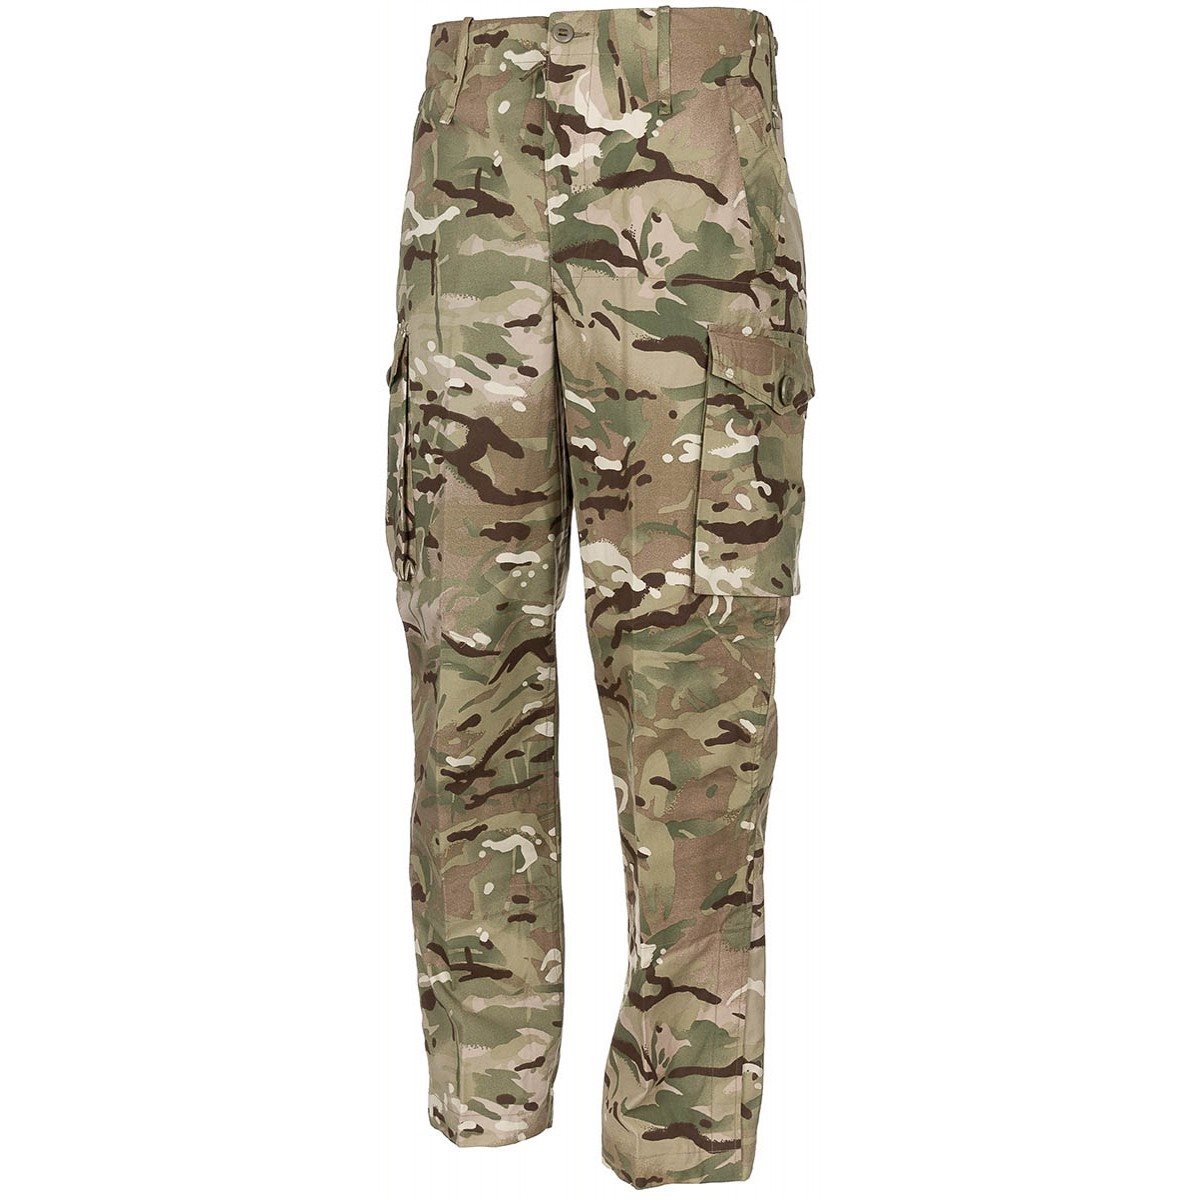 COMBAT WINDPROOF MTP Pants | Army surplus MILITARY RANGE